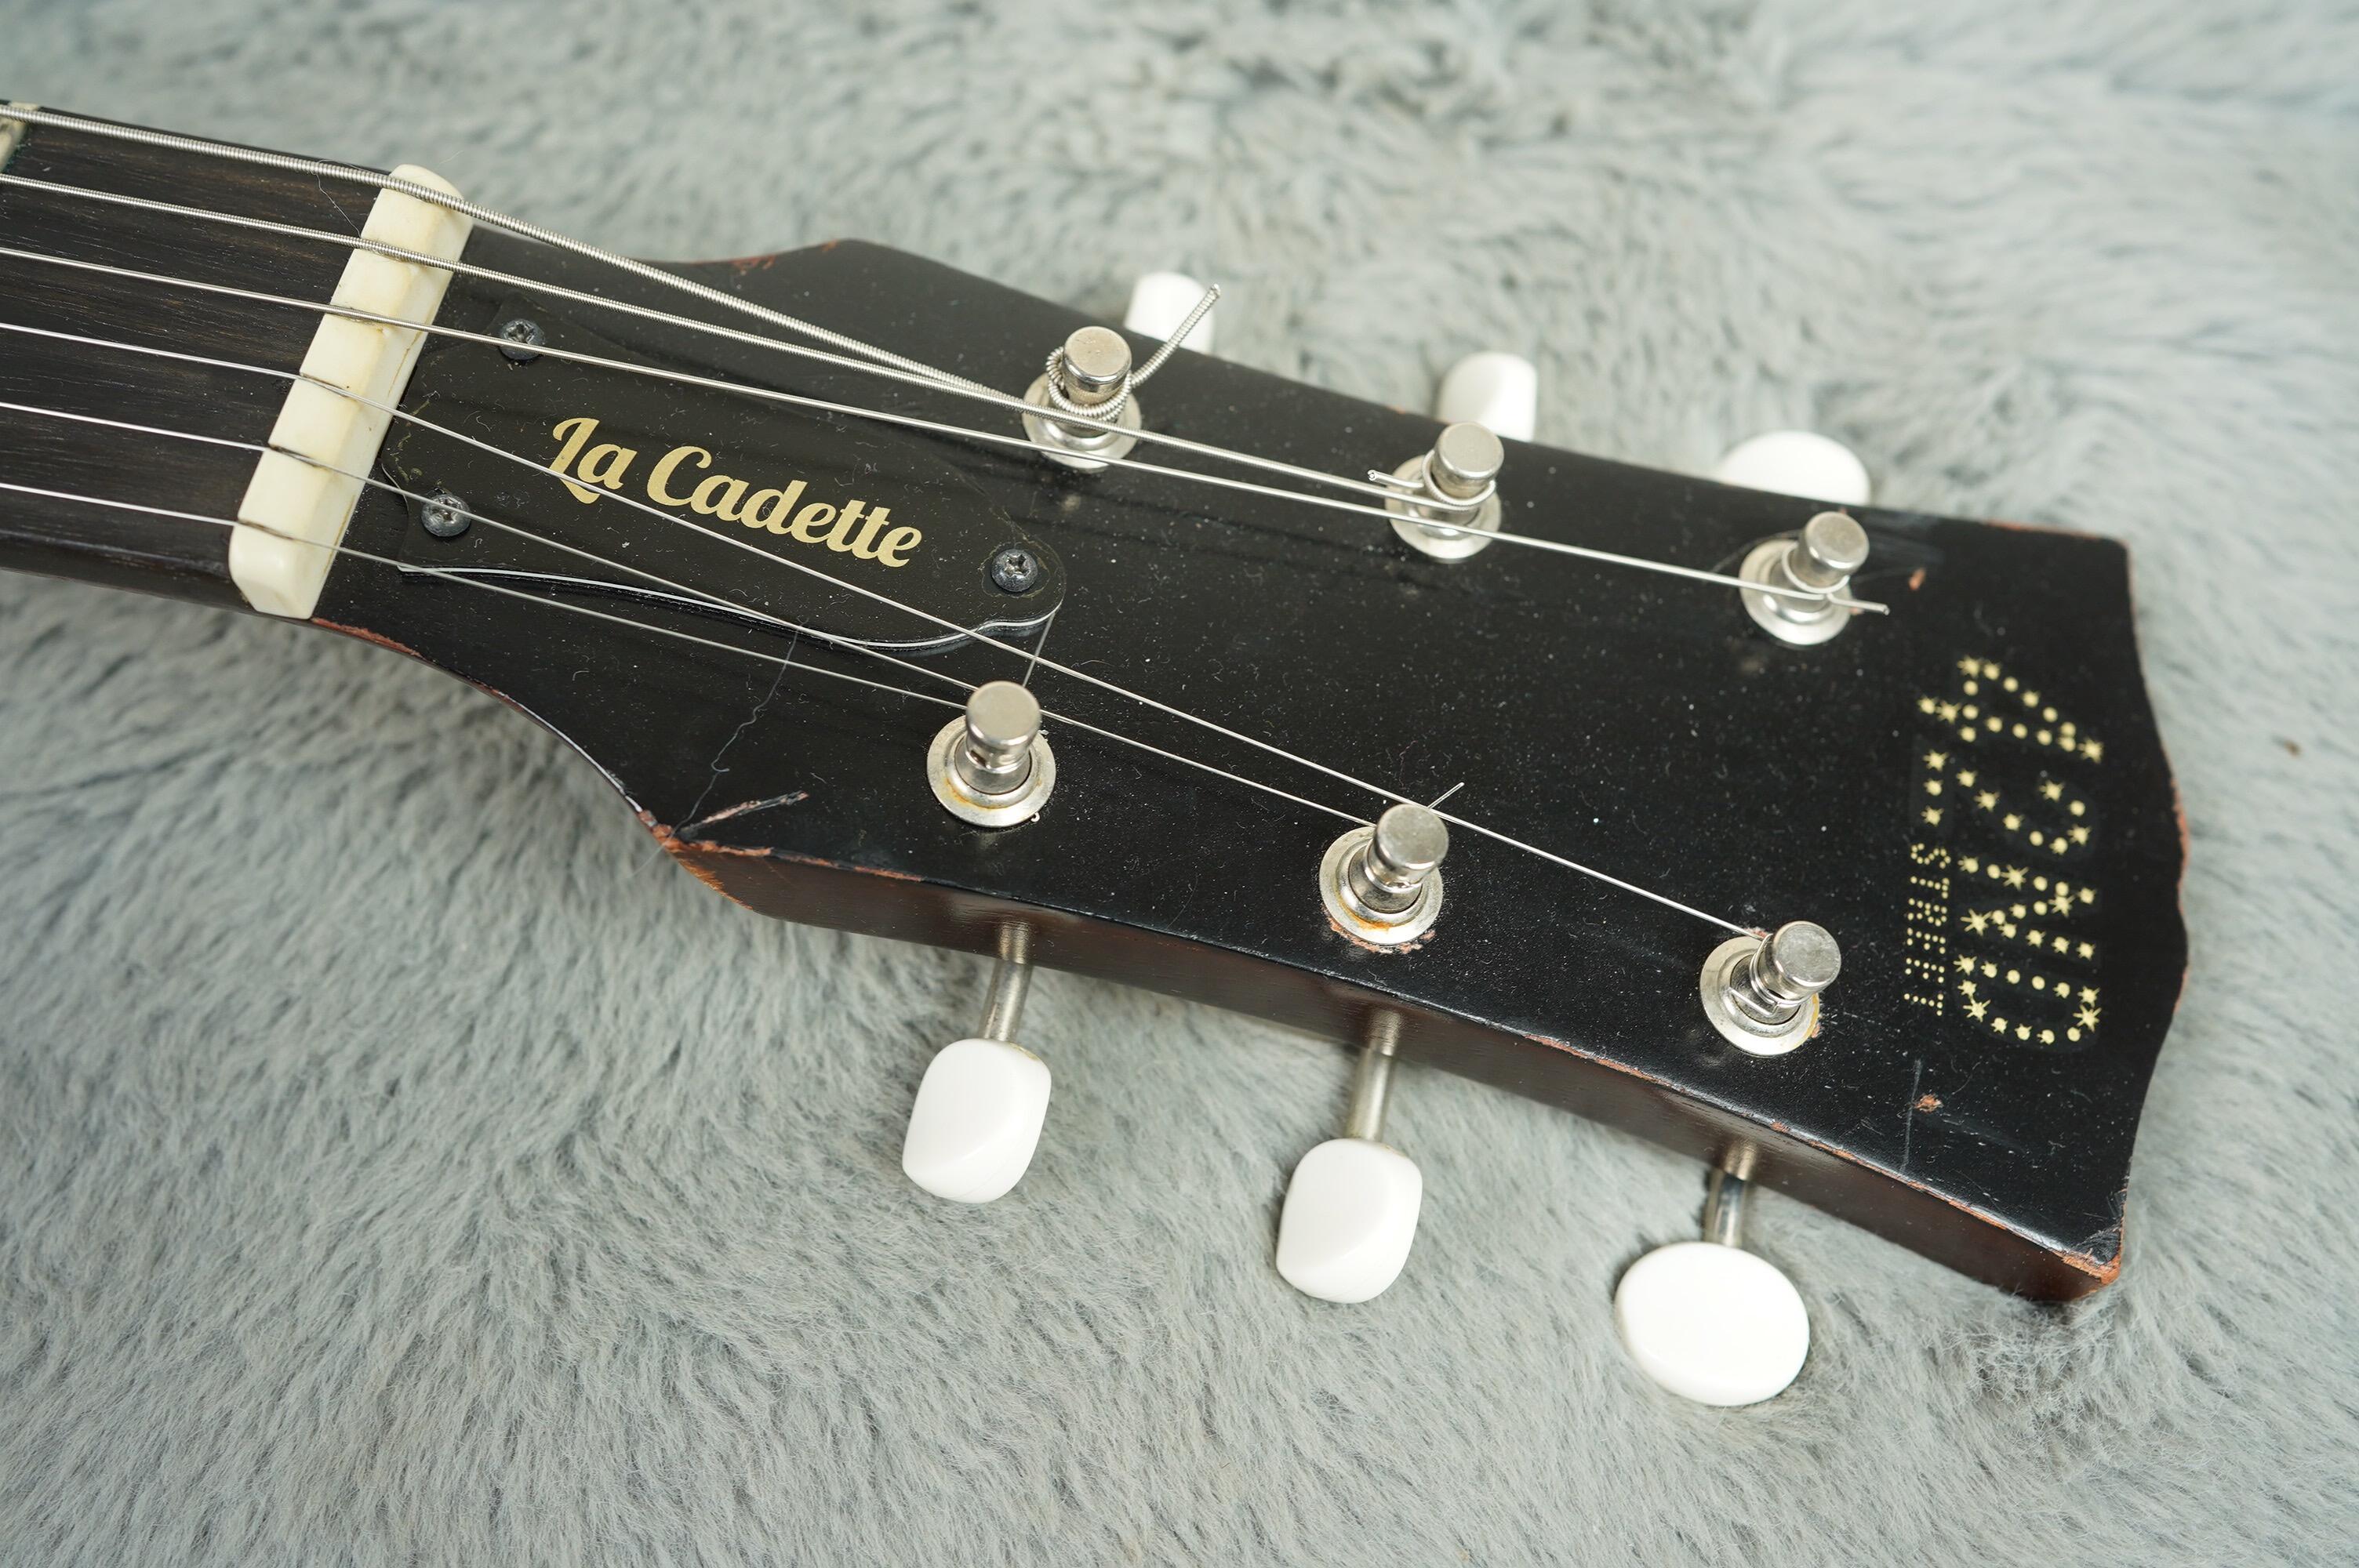 2016 42nd Street Guitars La Cadette